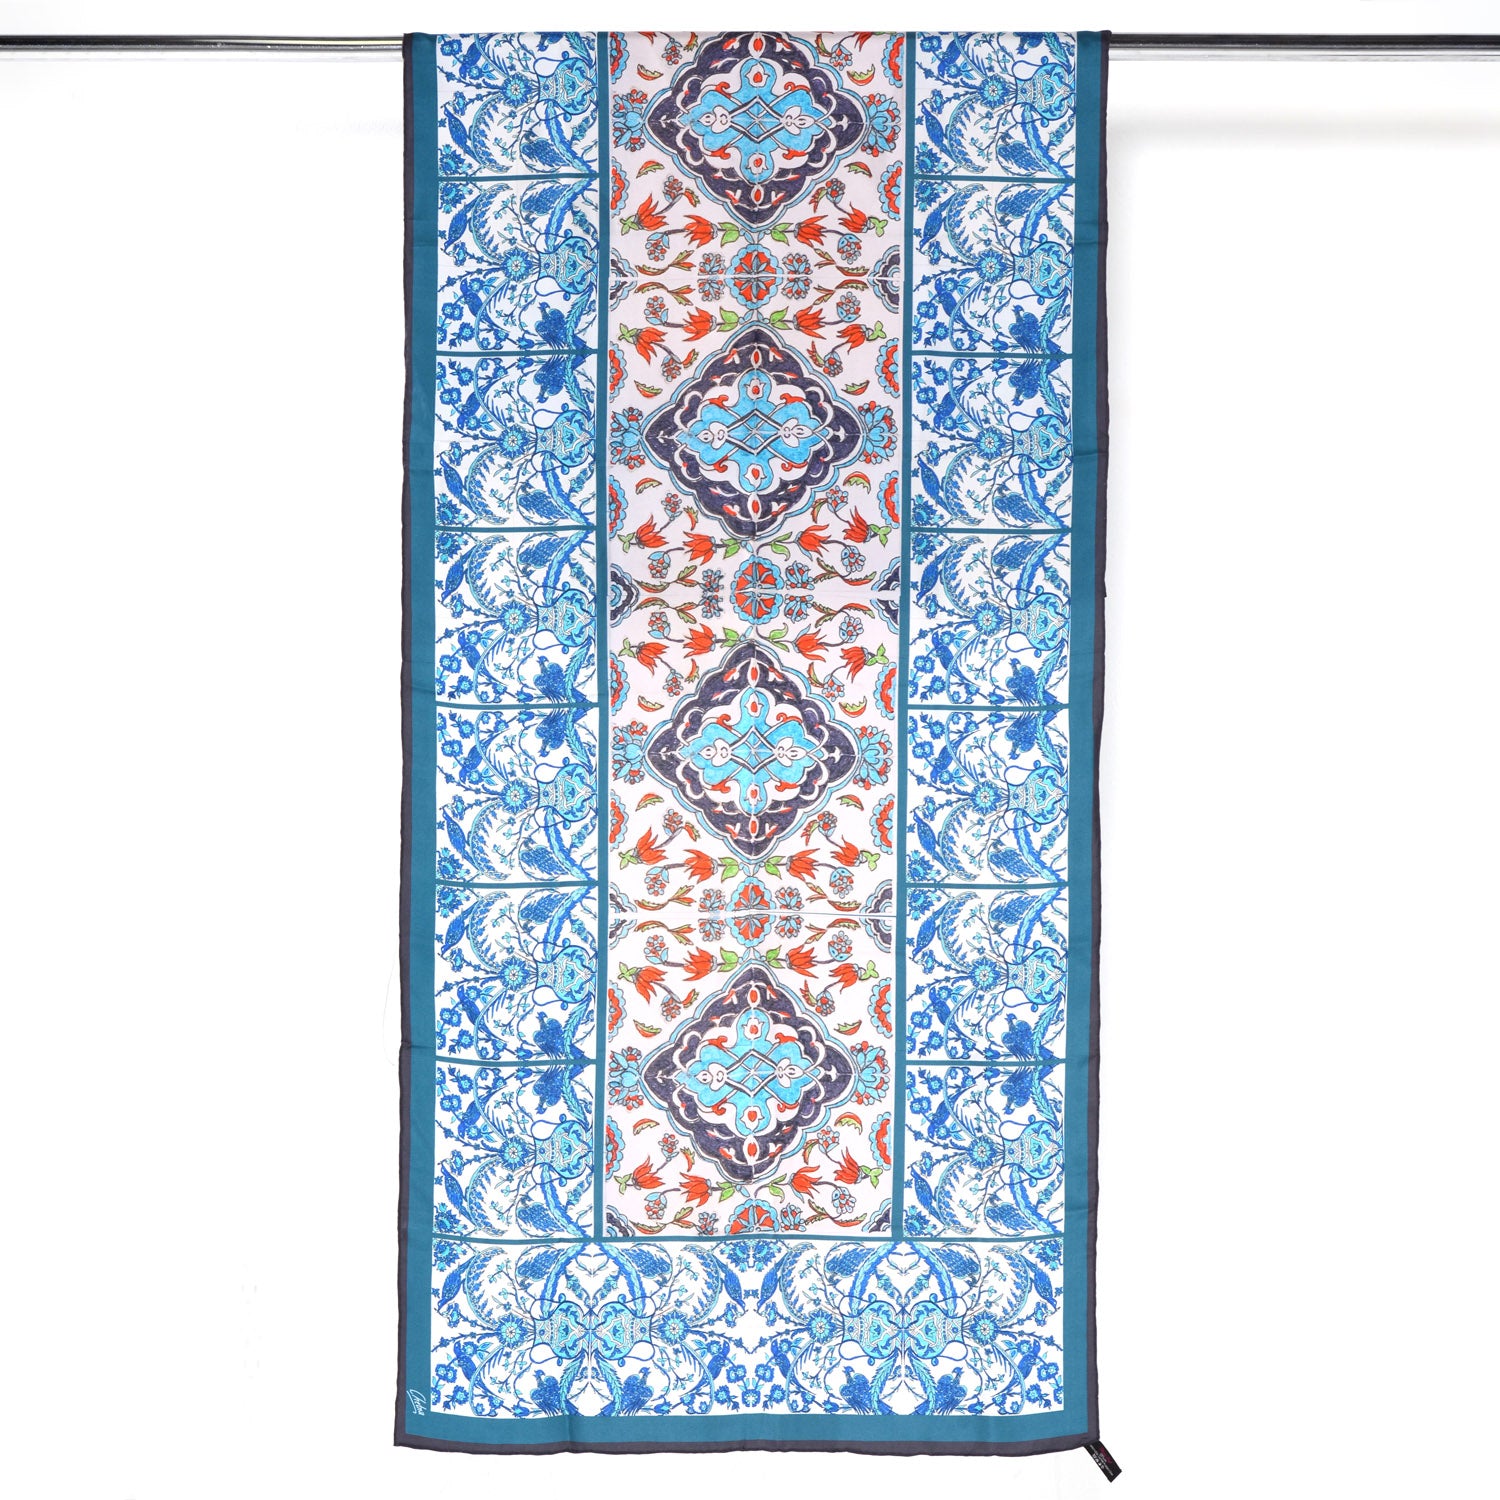 Istanbul Tiles - Long Silk Cotton Scarf